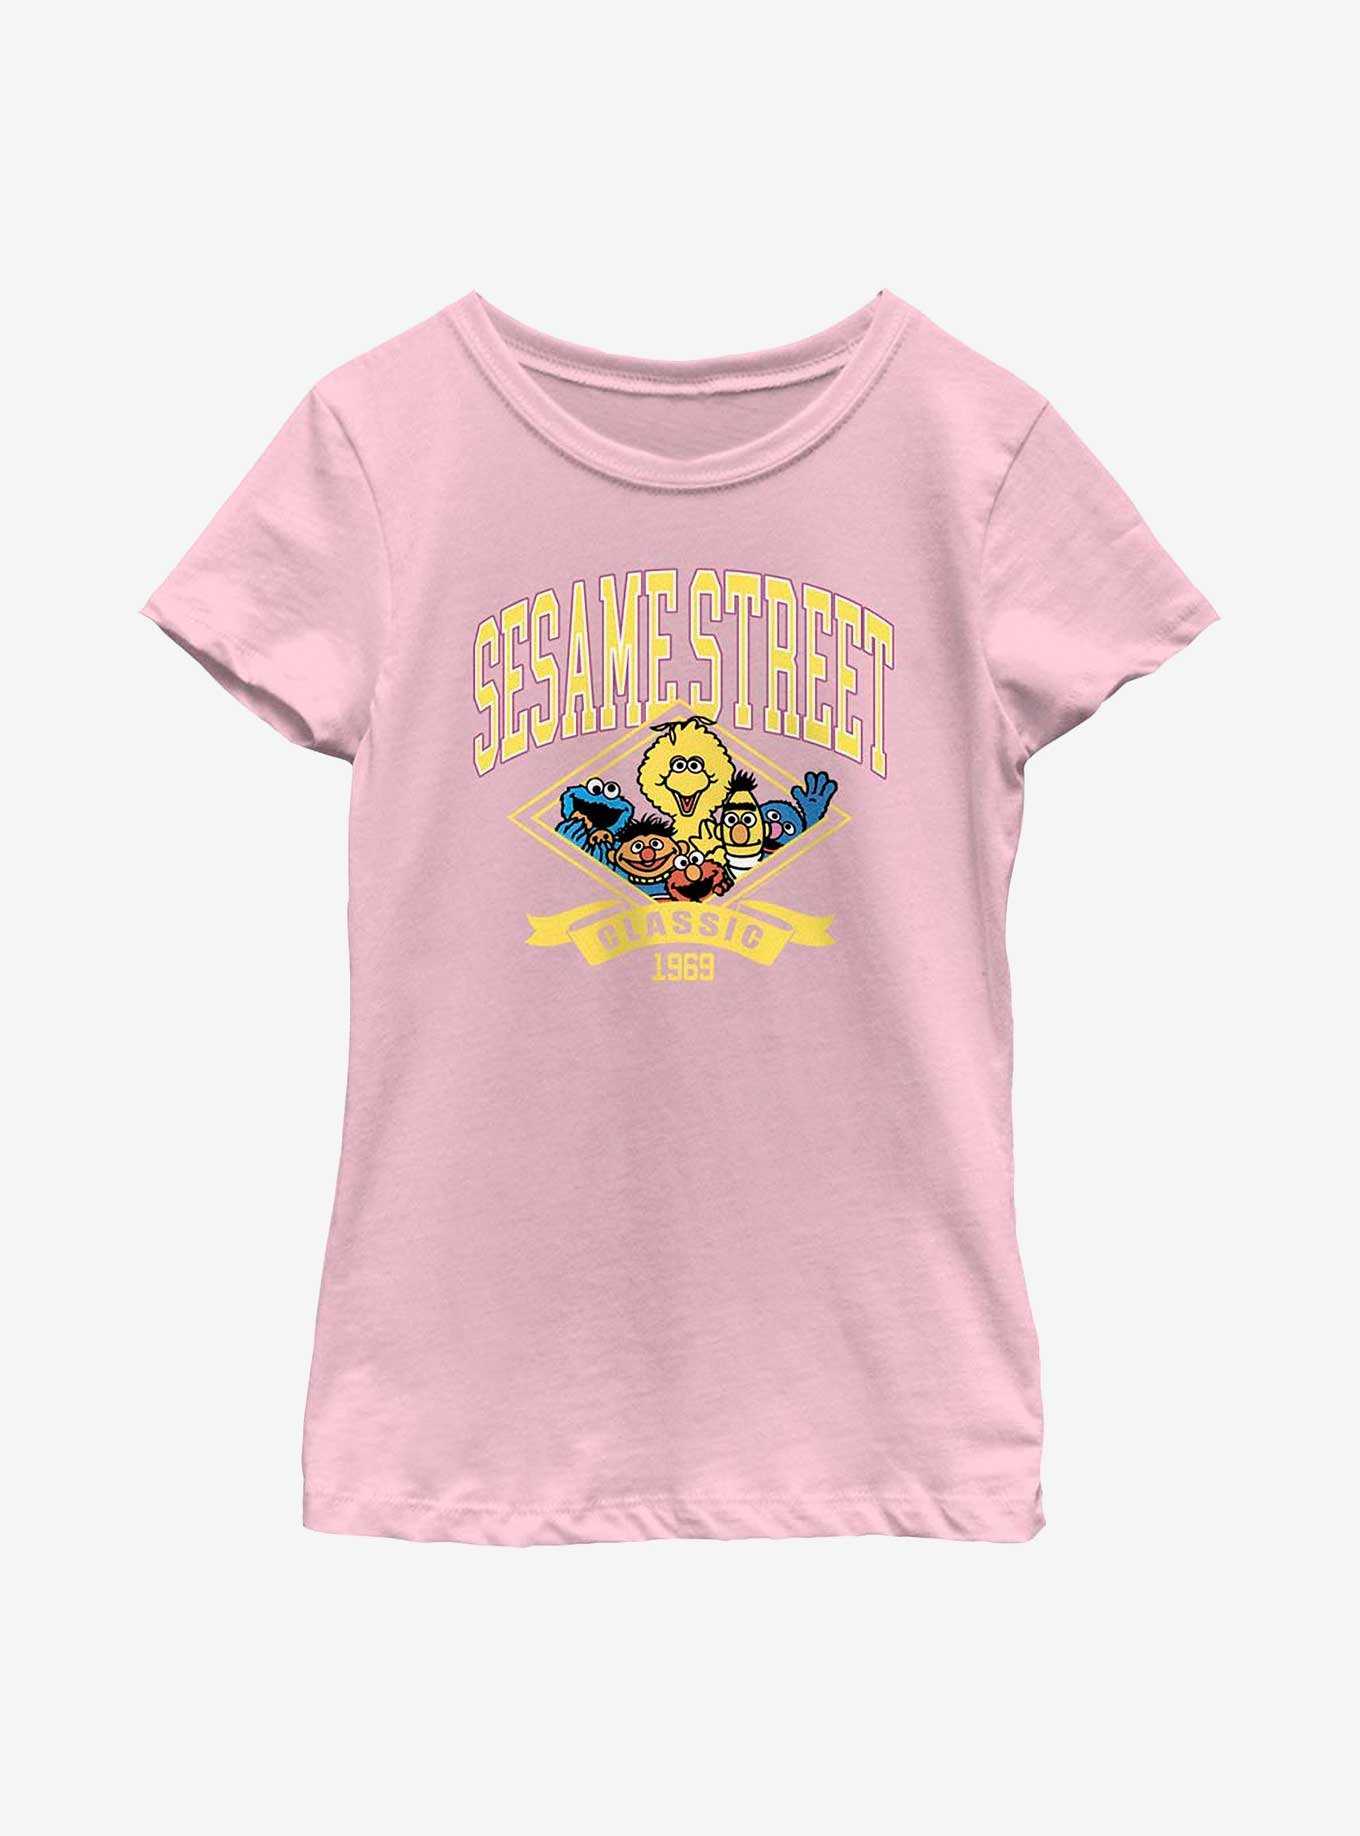 Sesame Street Classic 1969 Youth Girls T-Shirt, , hi-res